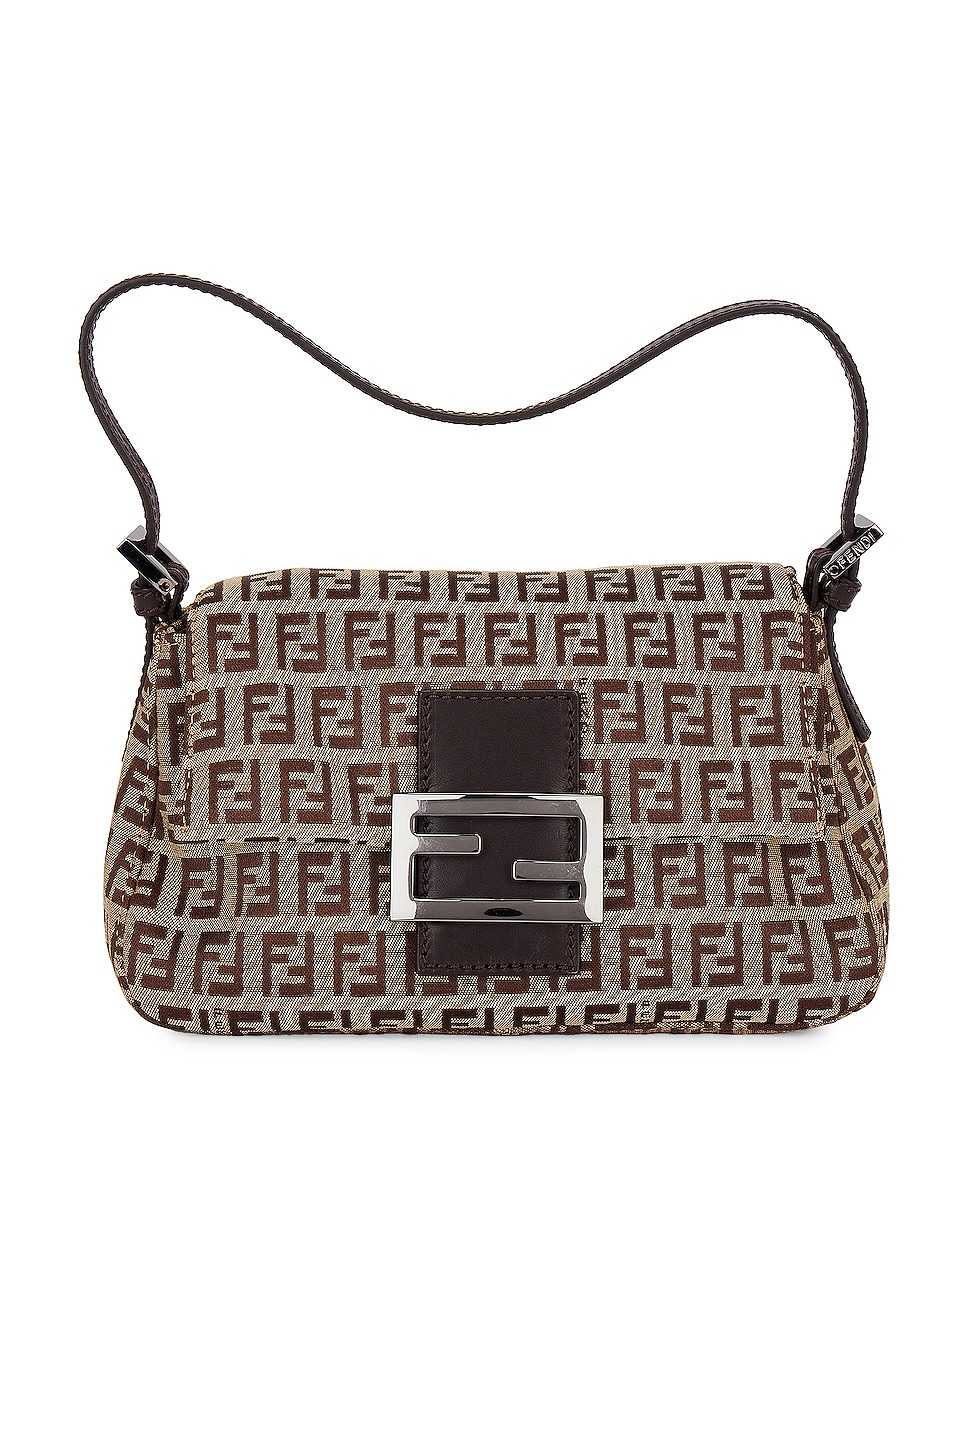 Fendi Mama Zucca Logo Leather Handbag Purse